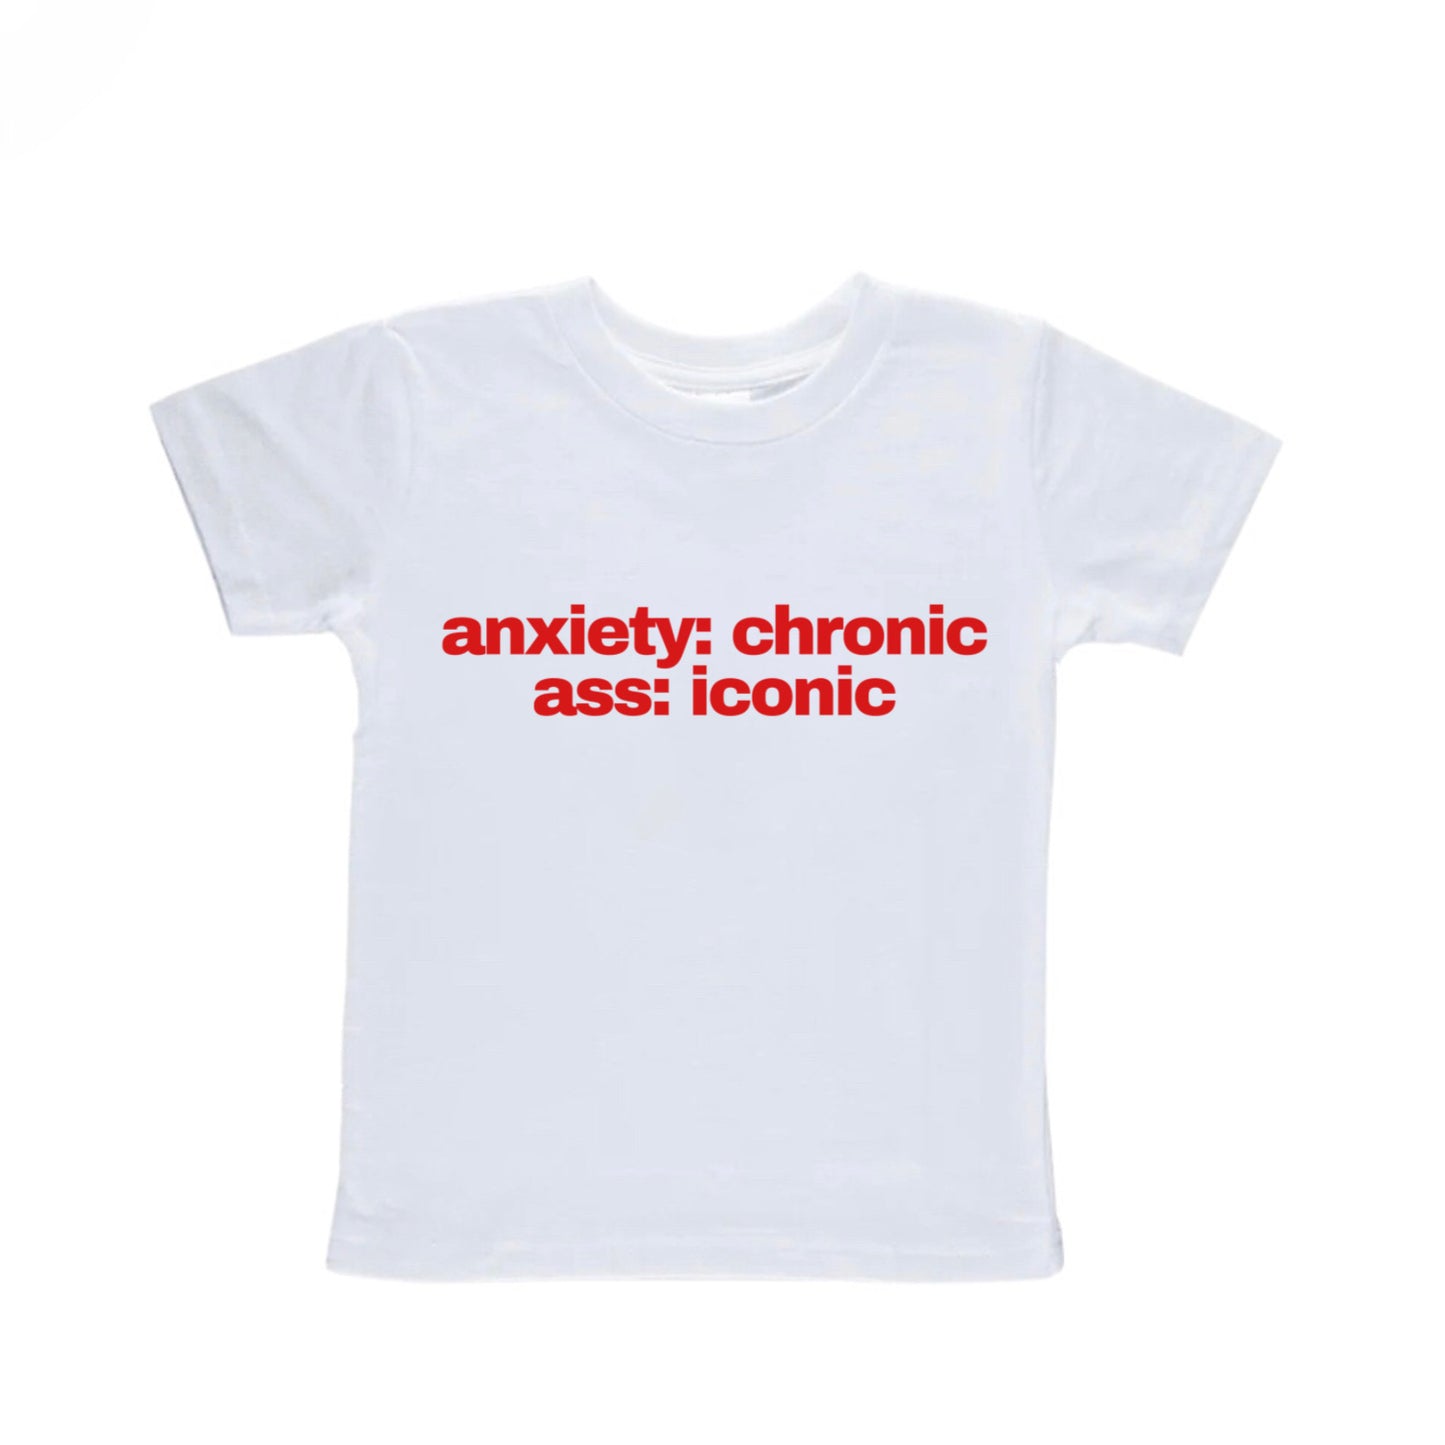 Anxiety: chronic Ass: Iconic Baby Tee